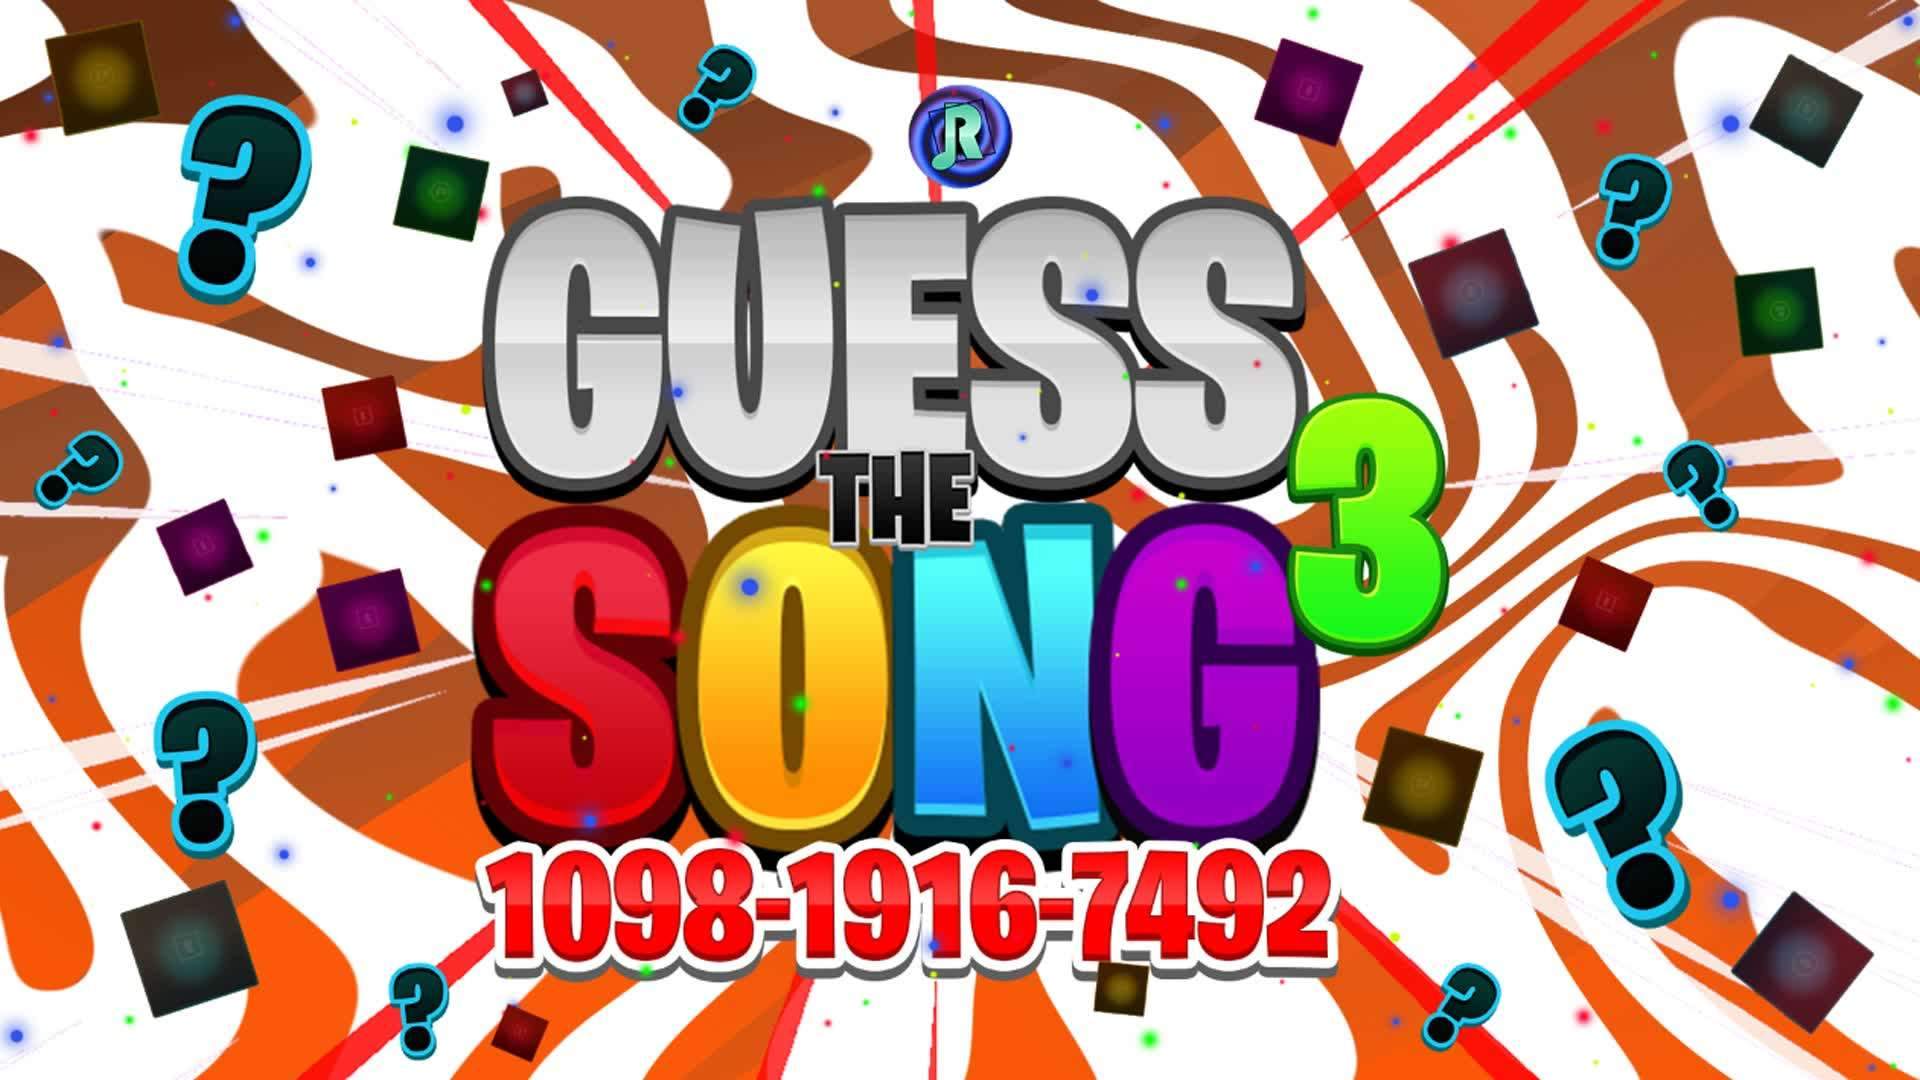 Guess The Song 3 | Team Rhythm 1098-1916-7492